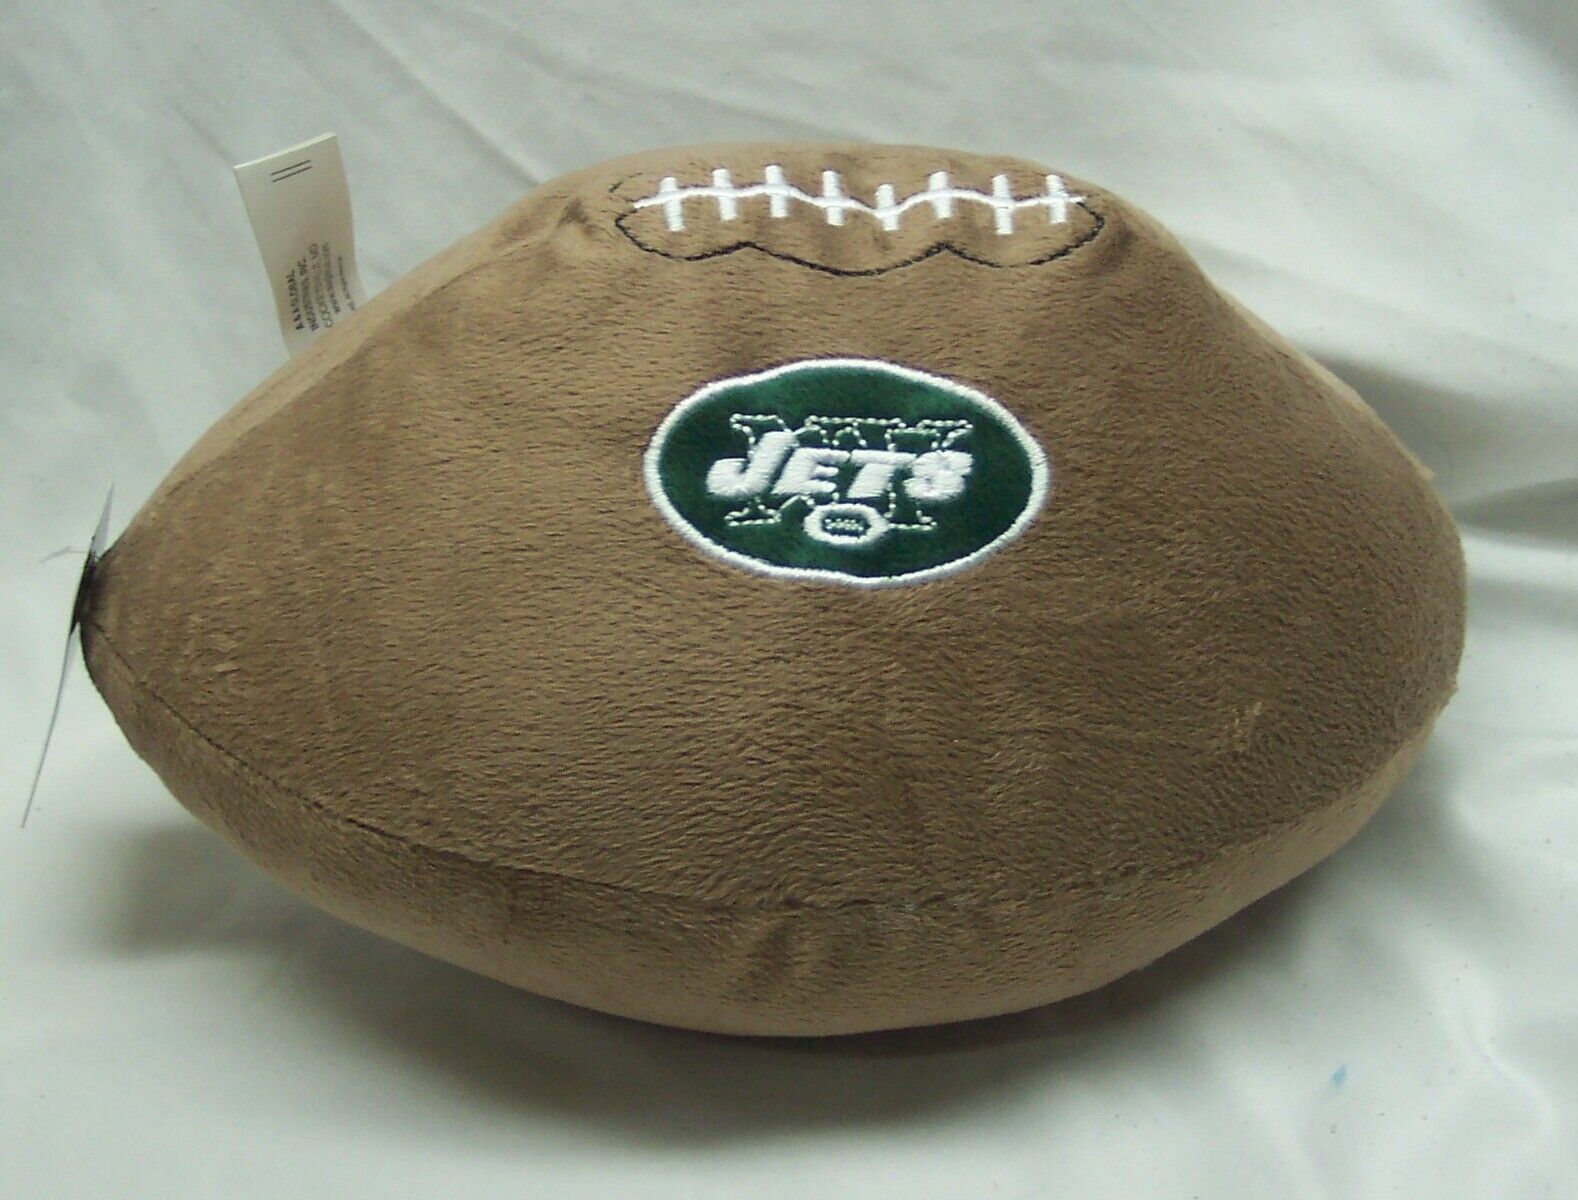 NEW YORK JETS NFL FOOTBALL 9" Plush STUFFED ANIMAL Toy NEW w/ TAG - $19.80